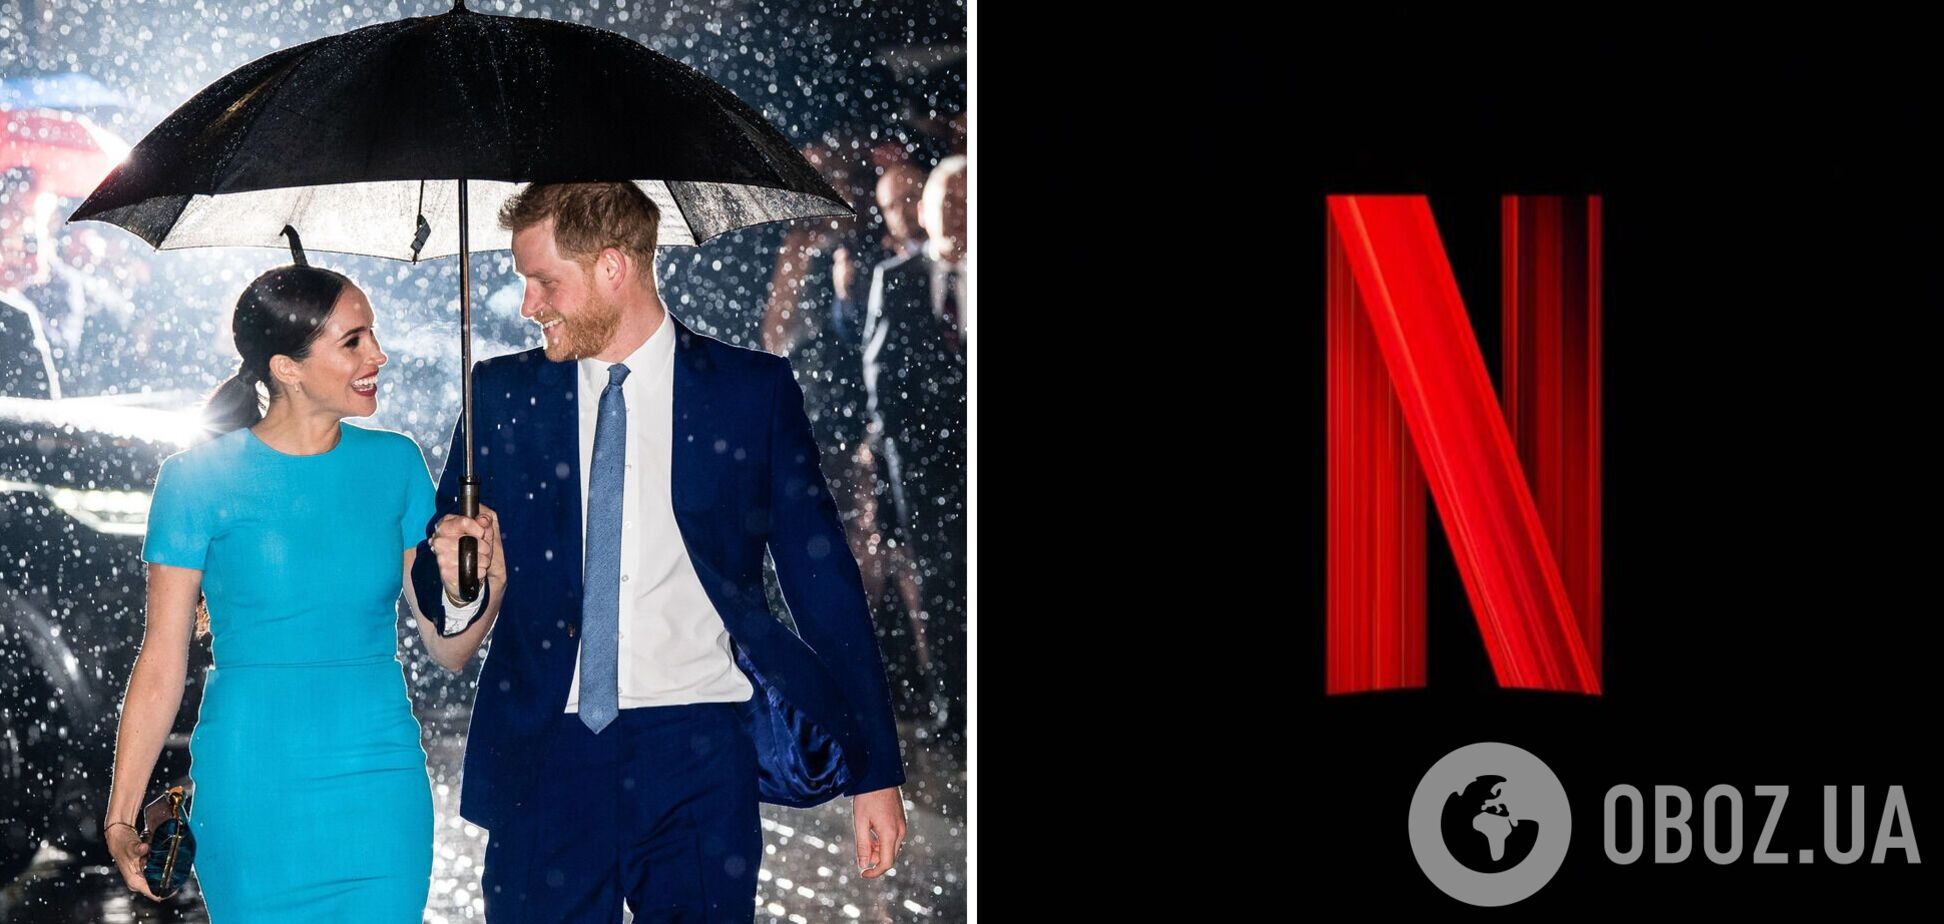 Меган Маркл раскрывает королевские секреты: тизер документалки Netflix 'Гарри и Меган'